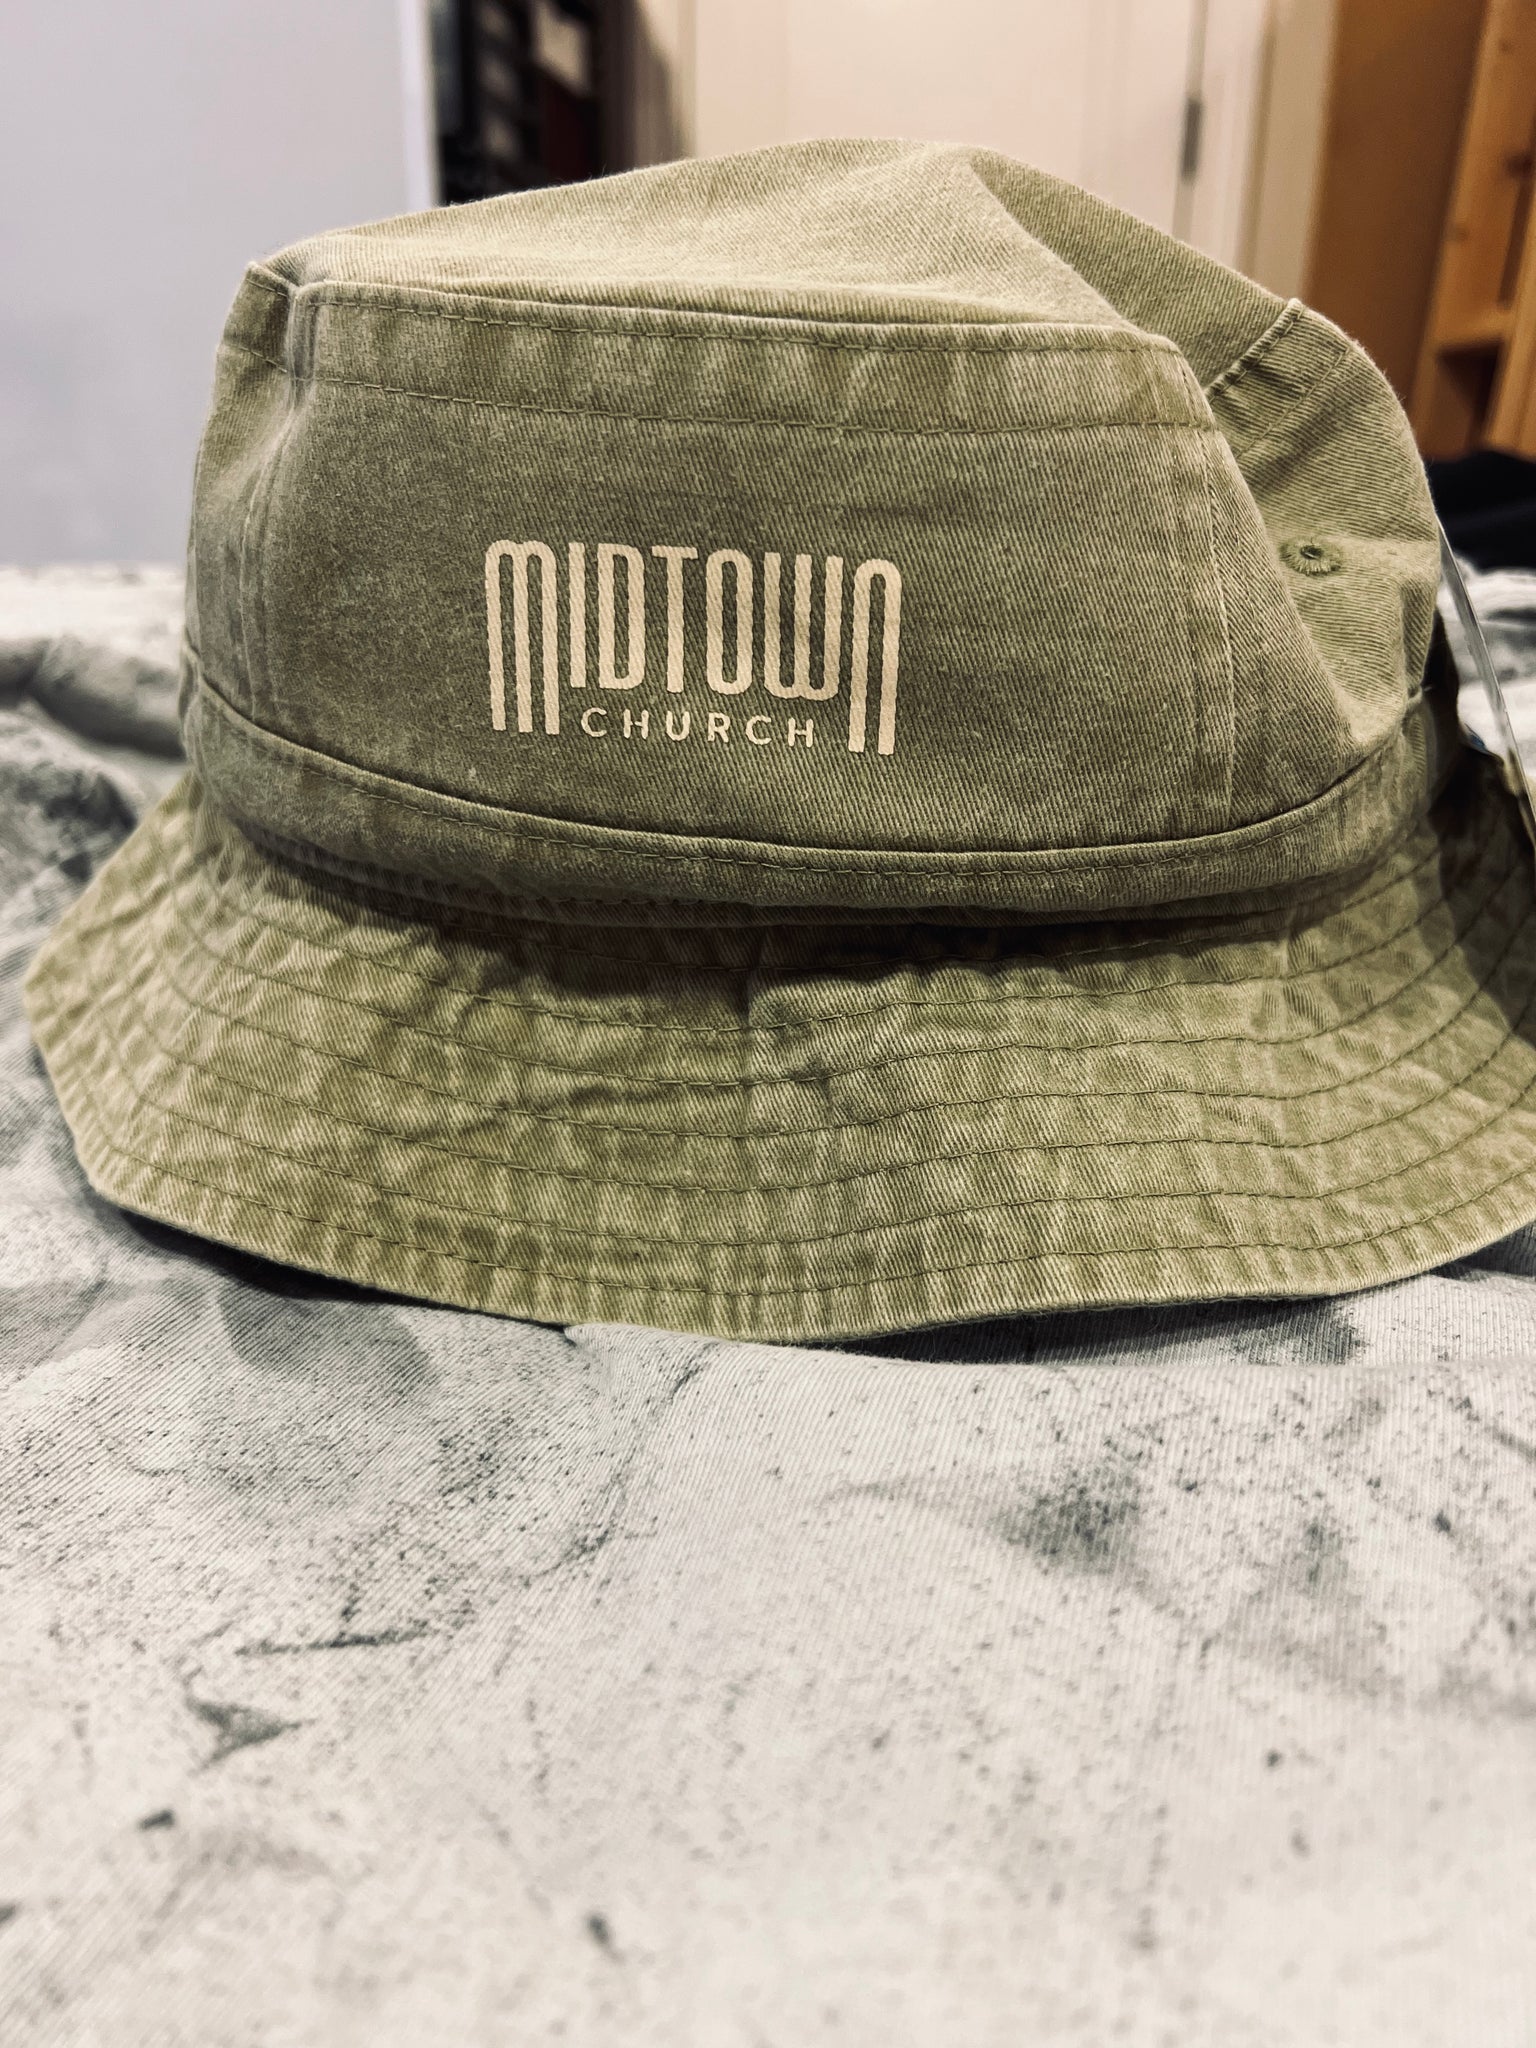 Midtown Church Bucket Hat